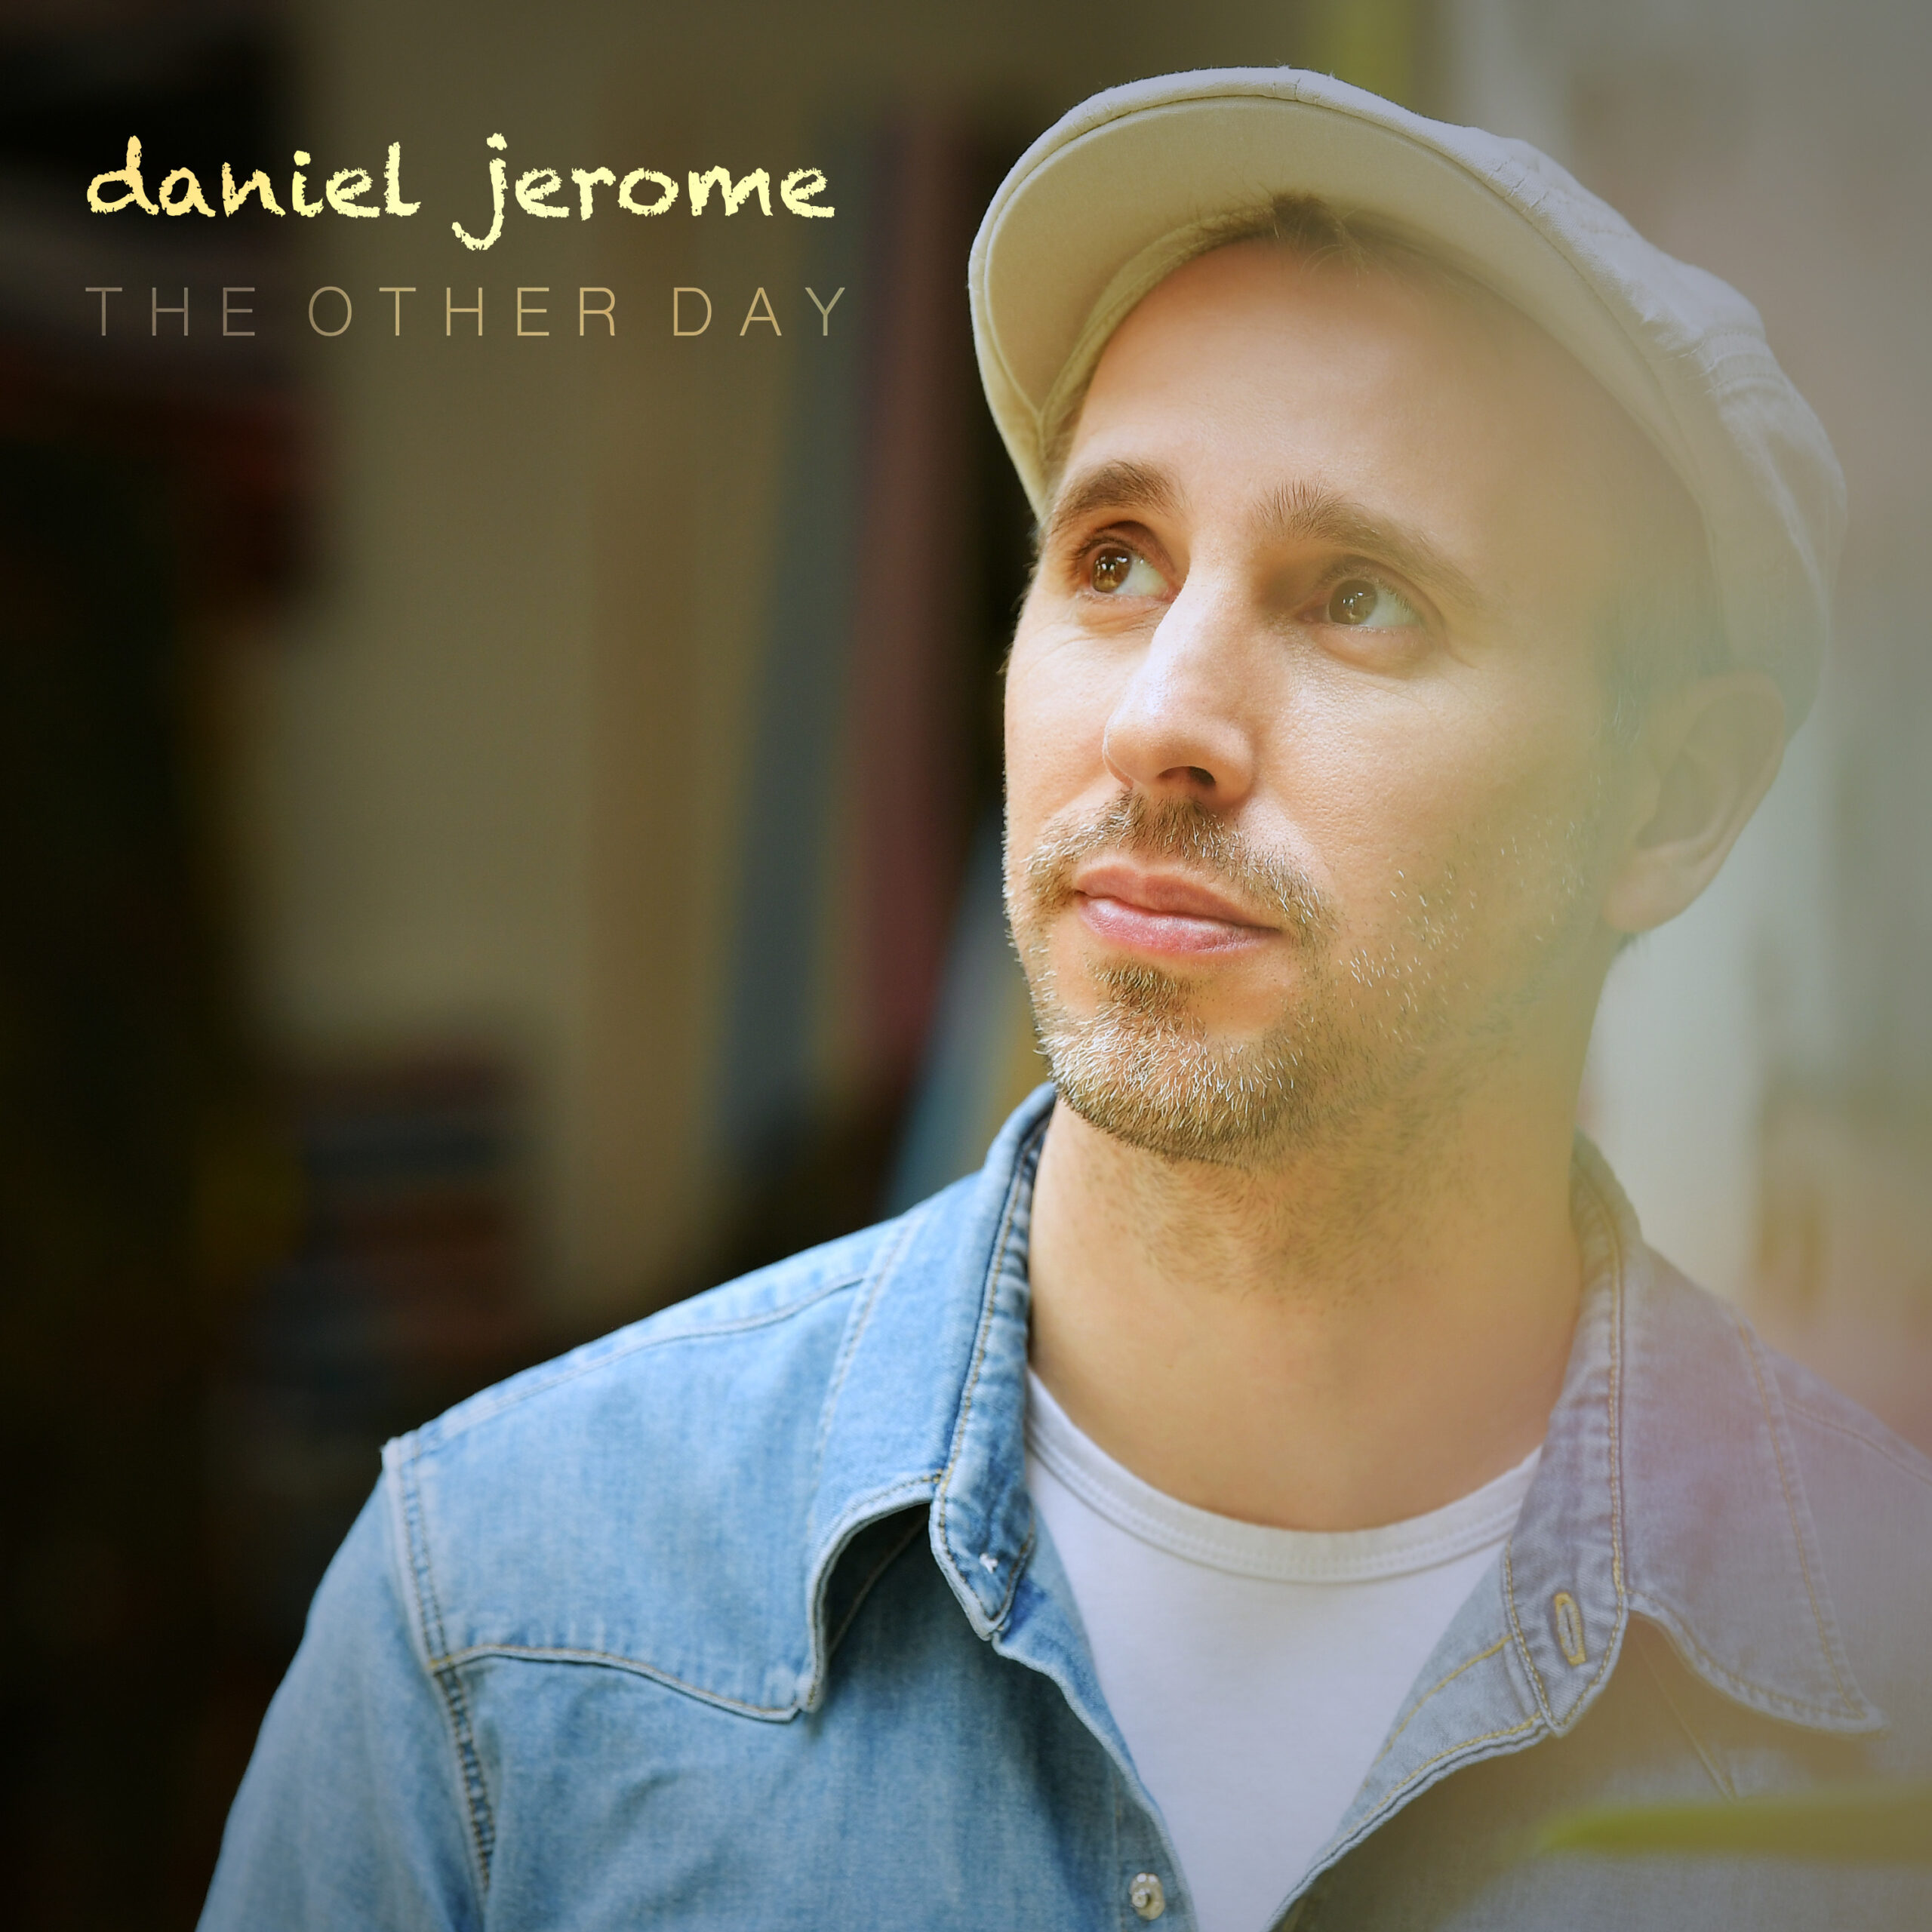 Debüt-Single von Daniel Jerome